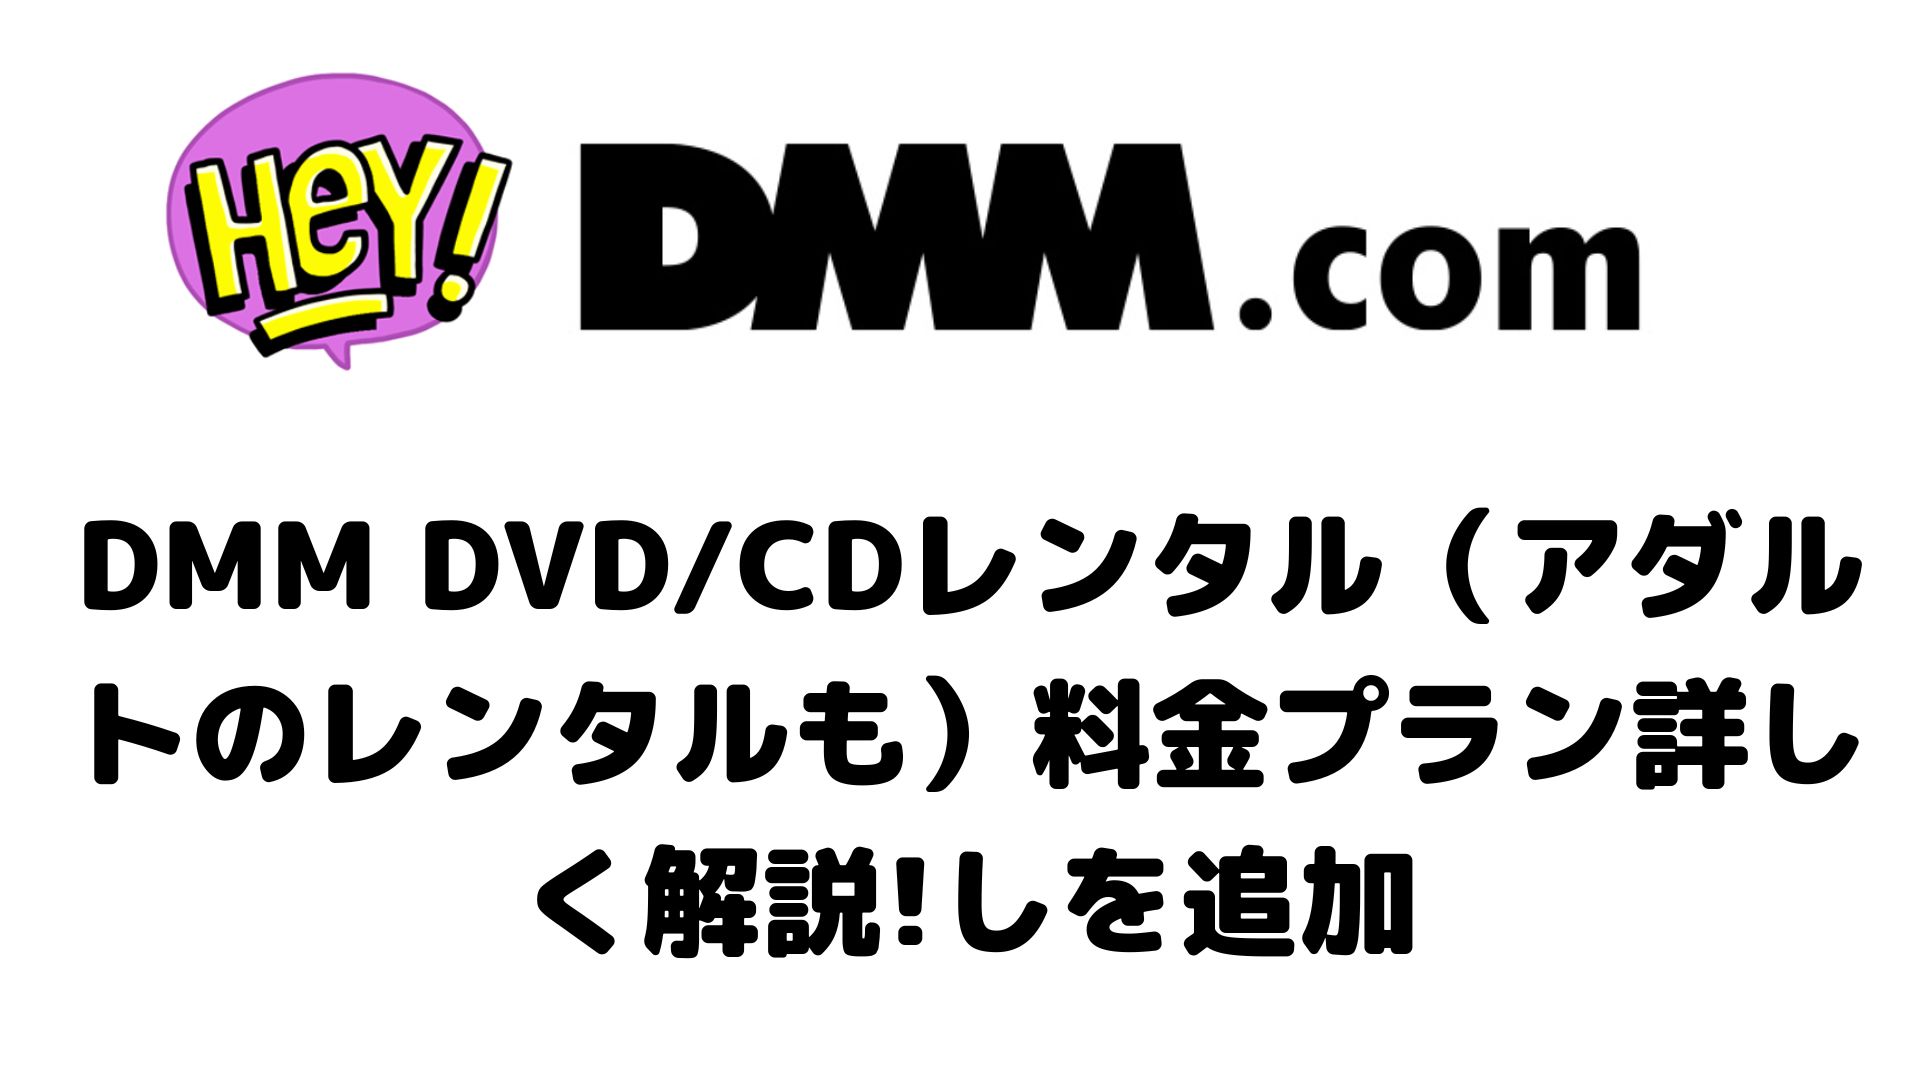 DMM DVD/CDレンタル（アダルトのレンタルも）料金プラン詳しく解説!